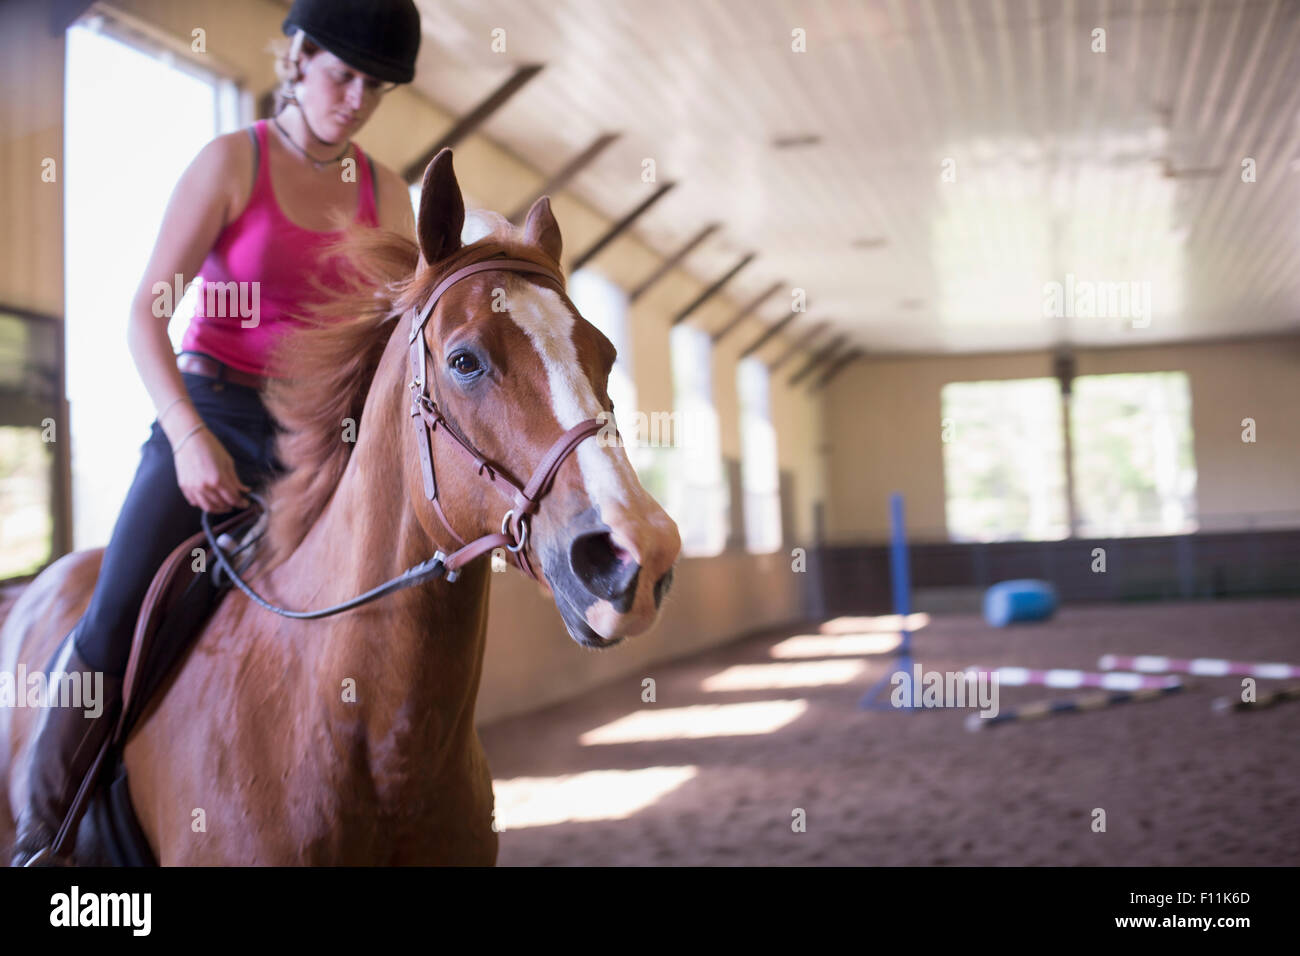 Caucasian woman riding horse in indoor paddock Stock Photo